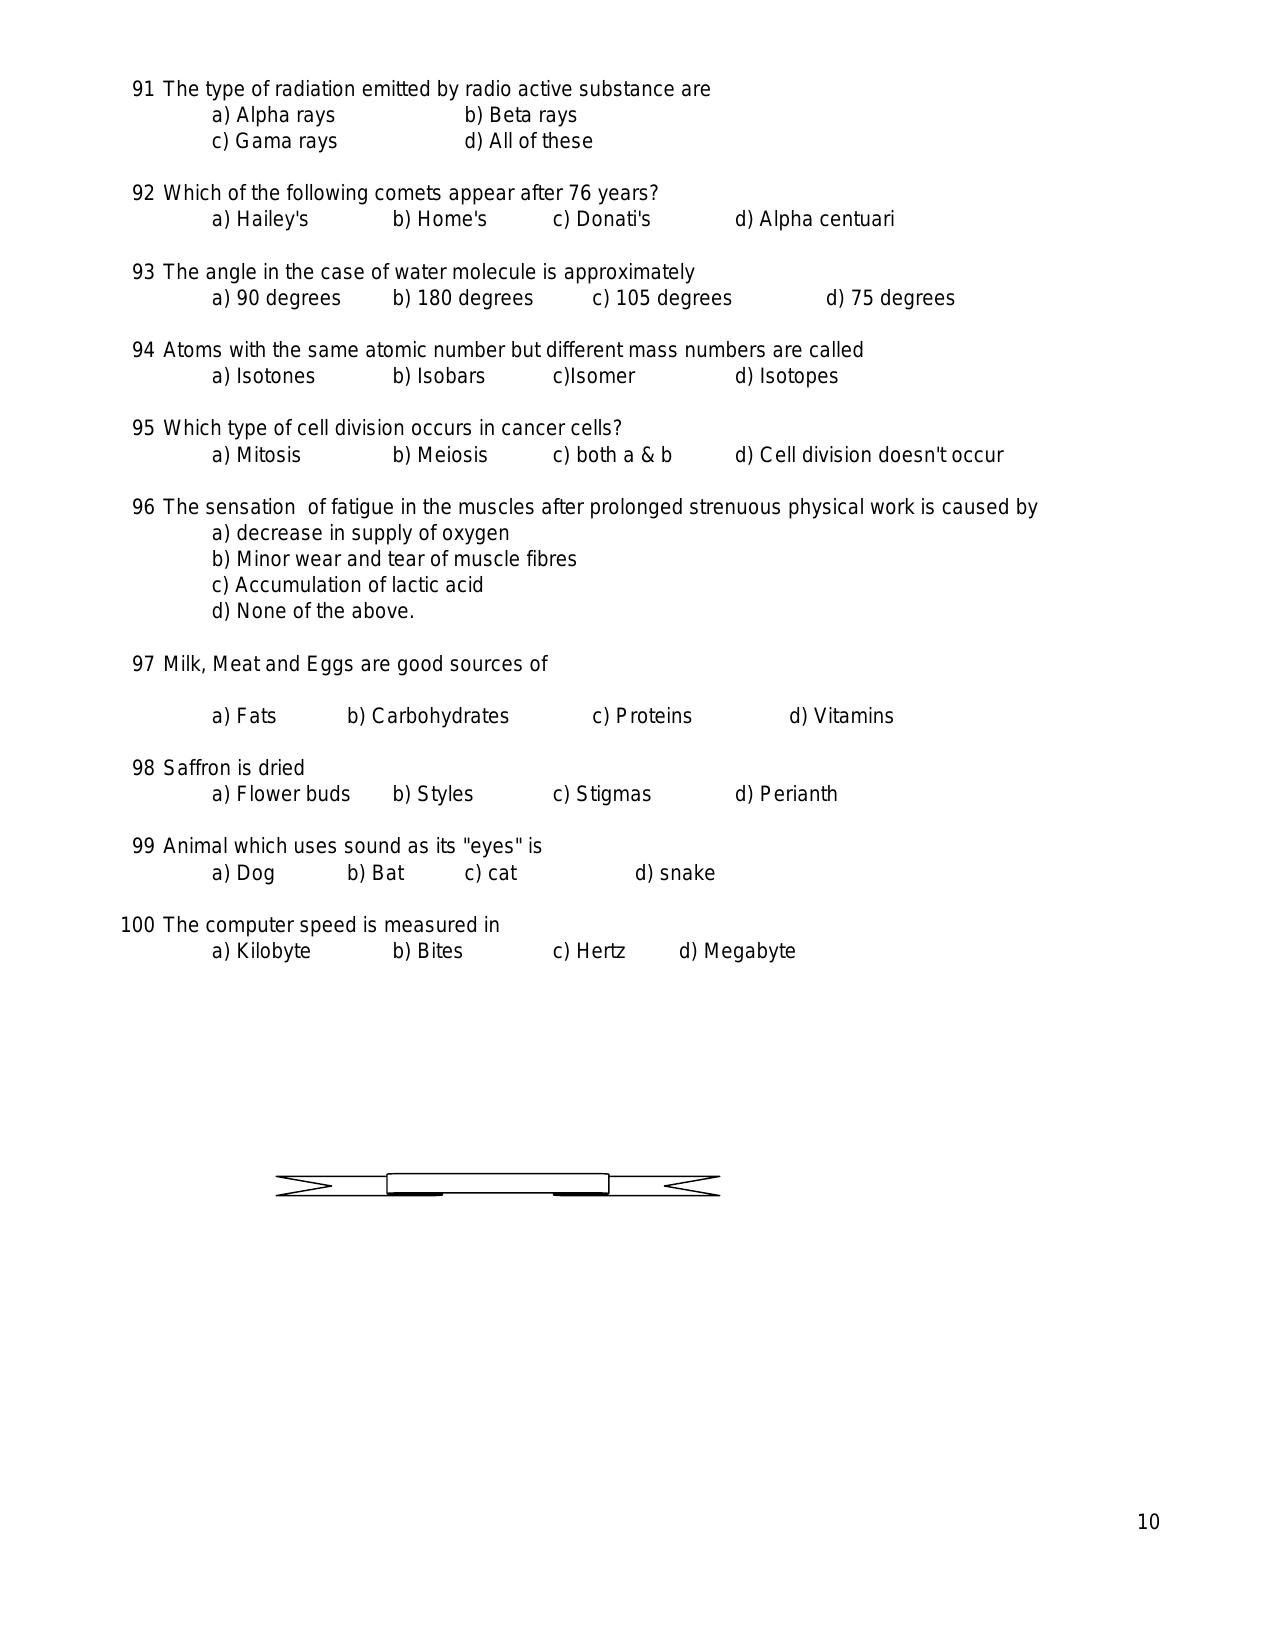 SEBI Officer Quantitative Aptitude Sample Paper - Page 10